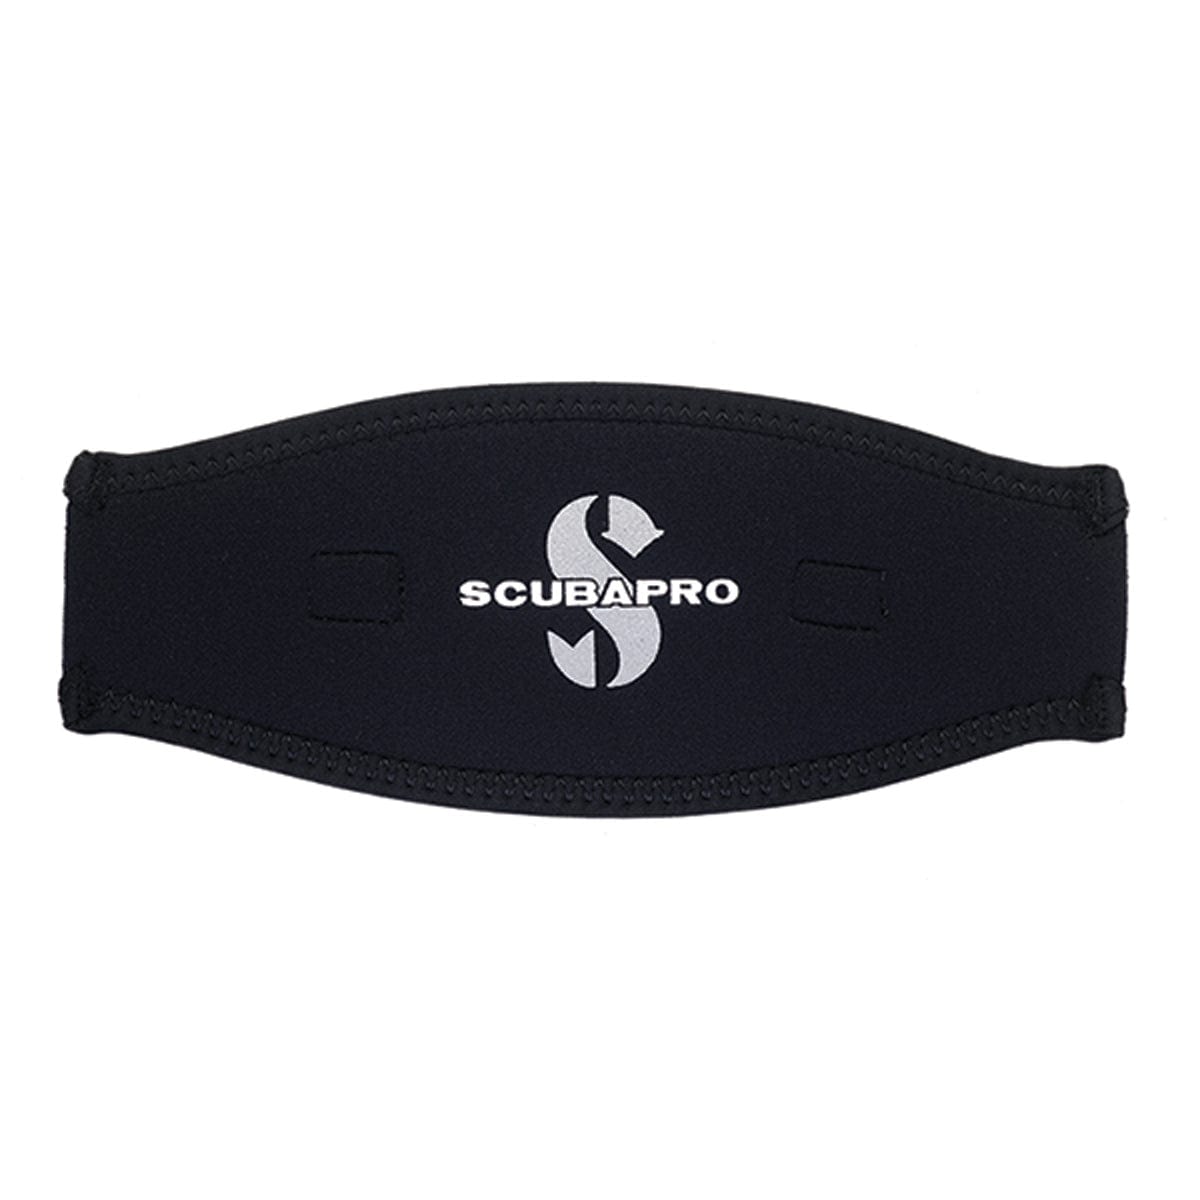 Scubapro Neoprene Mask Strap 2.5MM - Black/Yellow - 25